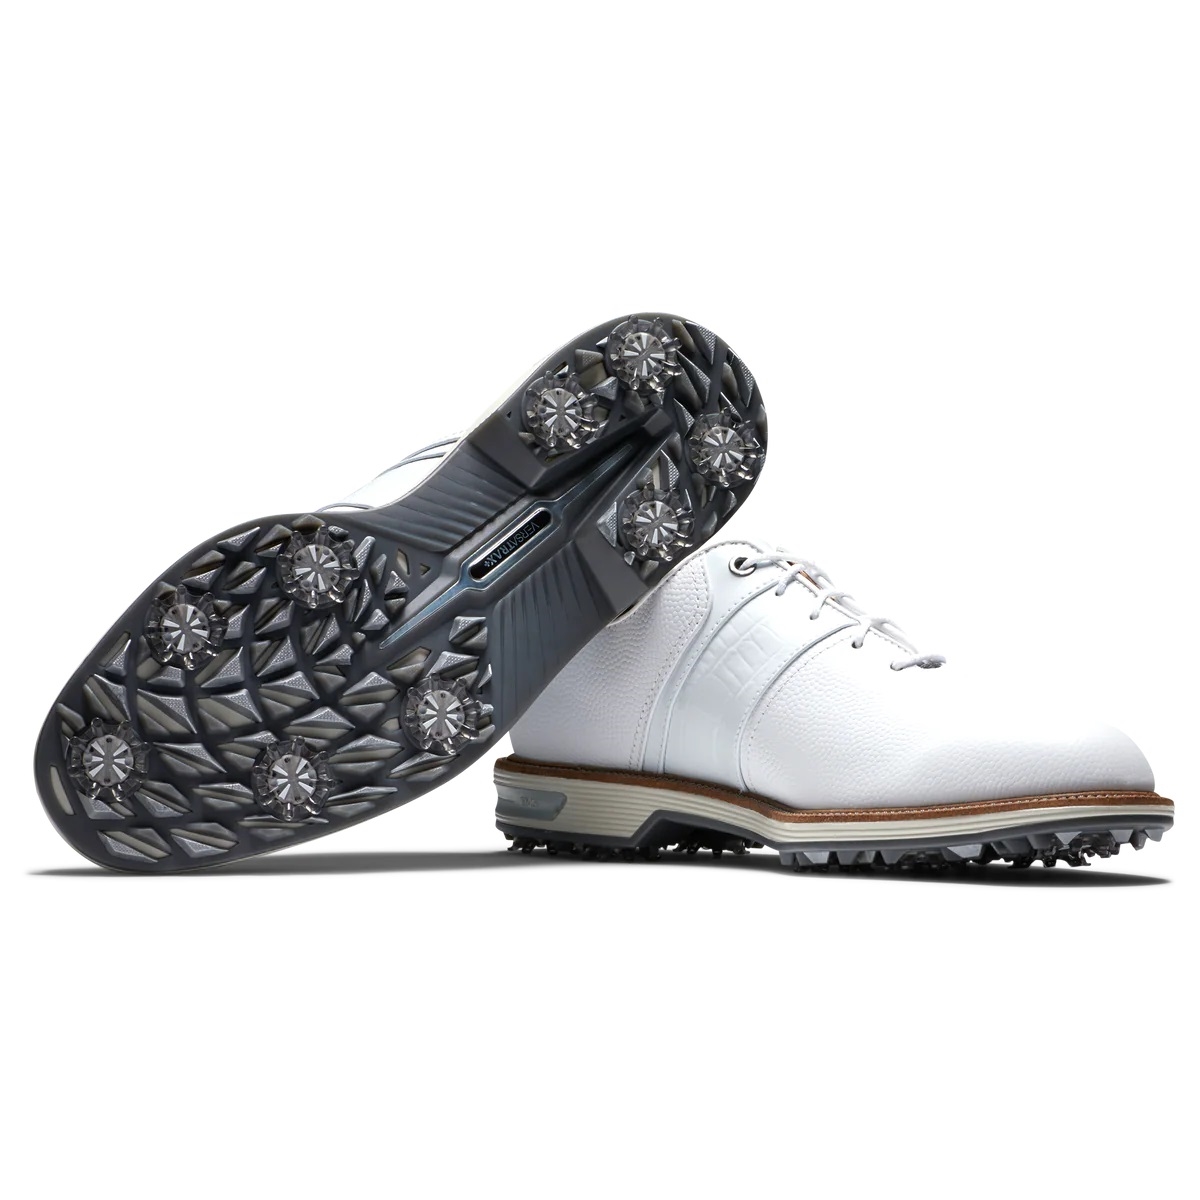 FootJoy Men's Premiere Packard Golf Shoes, White